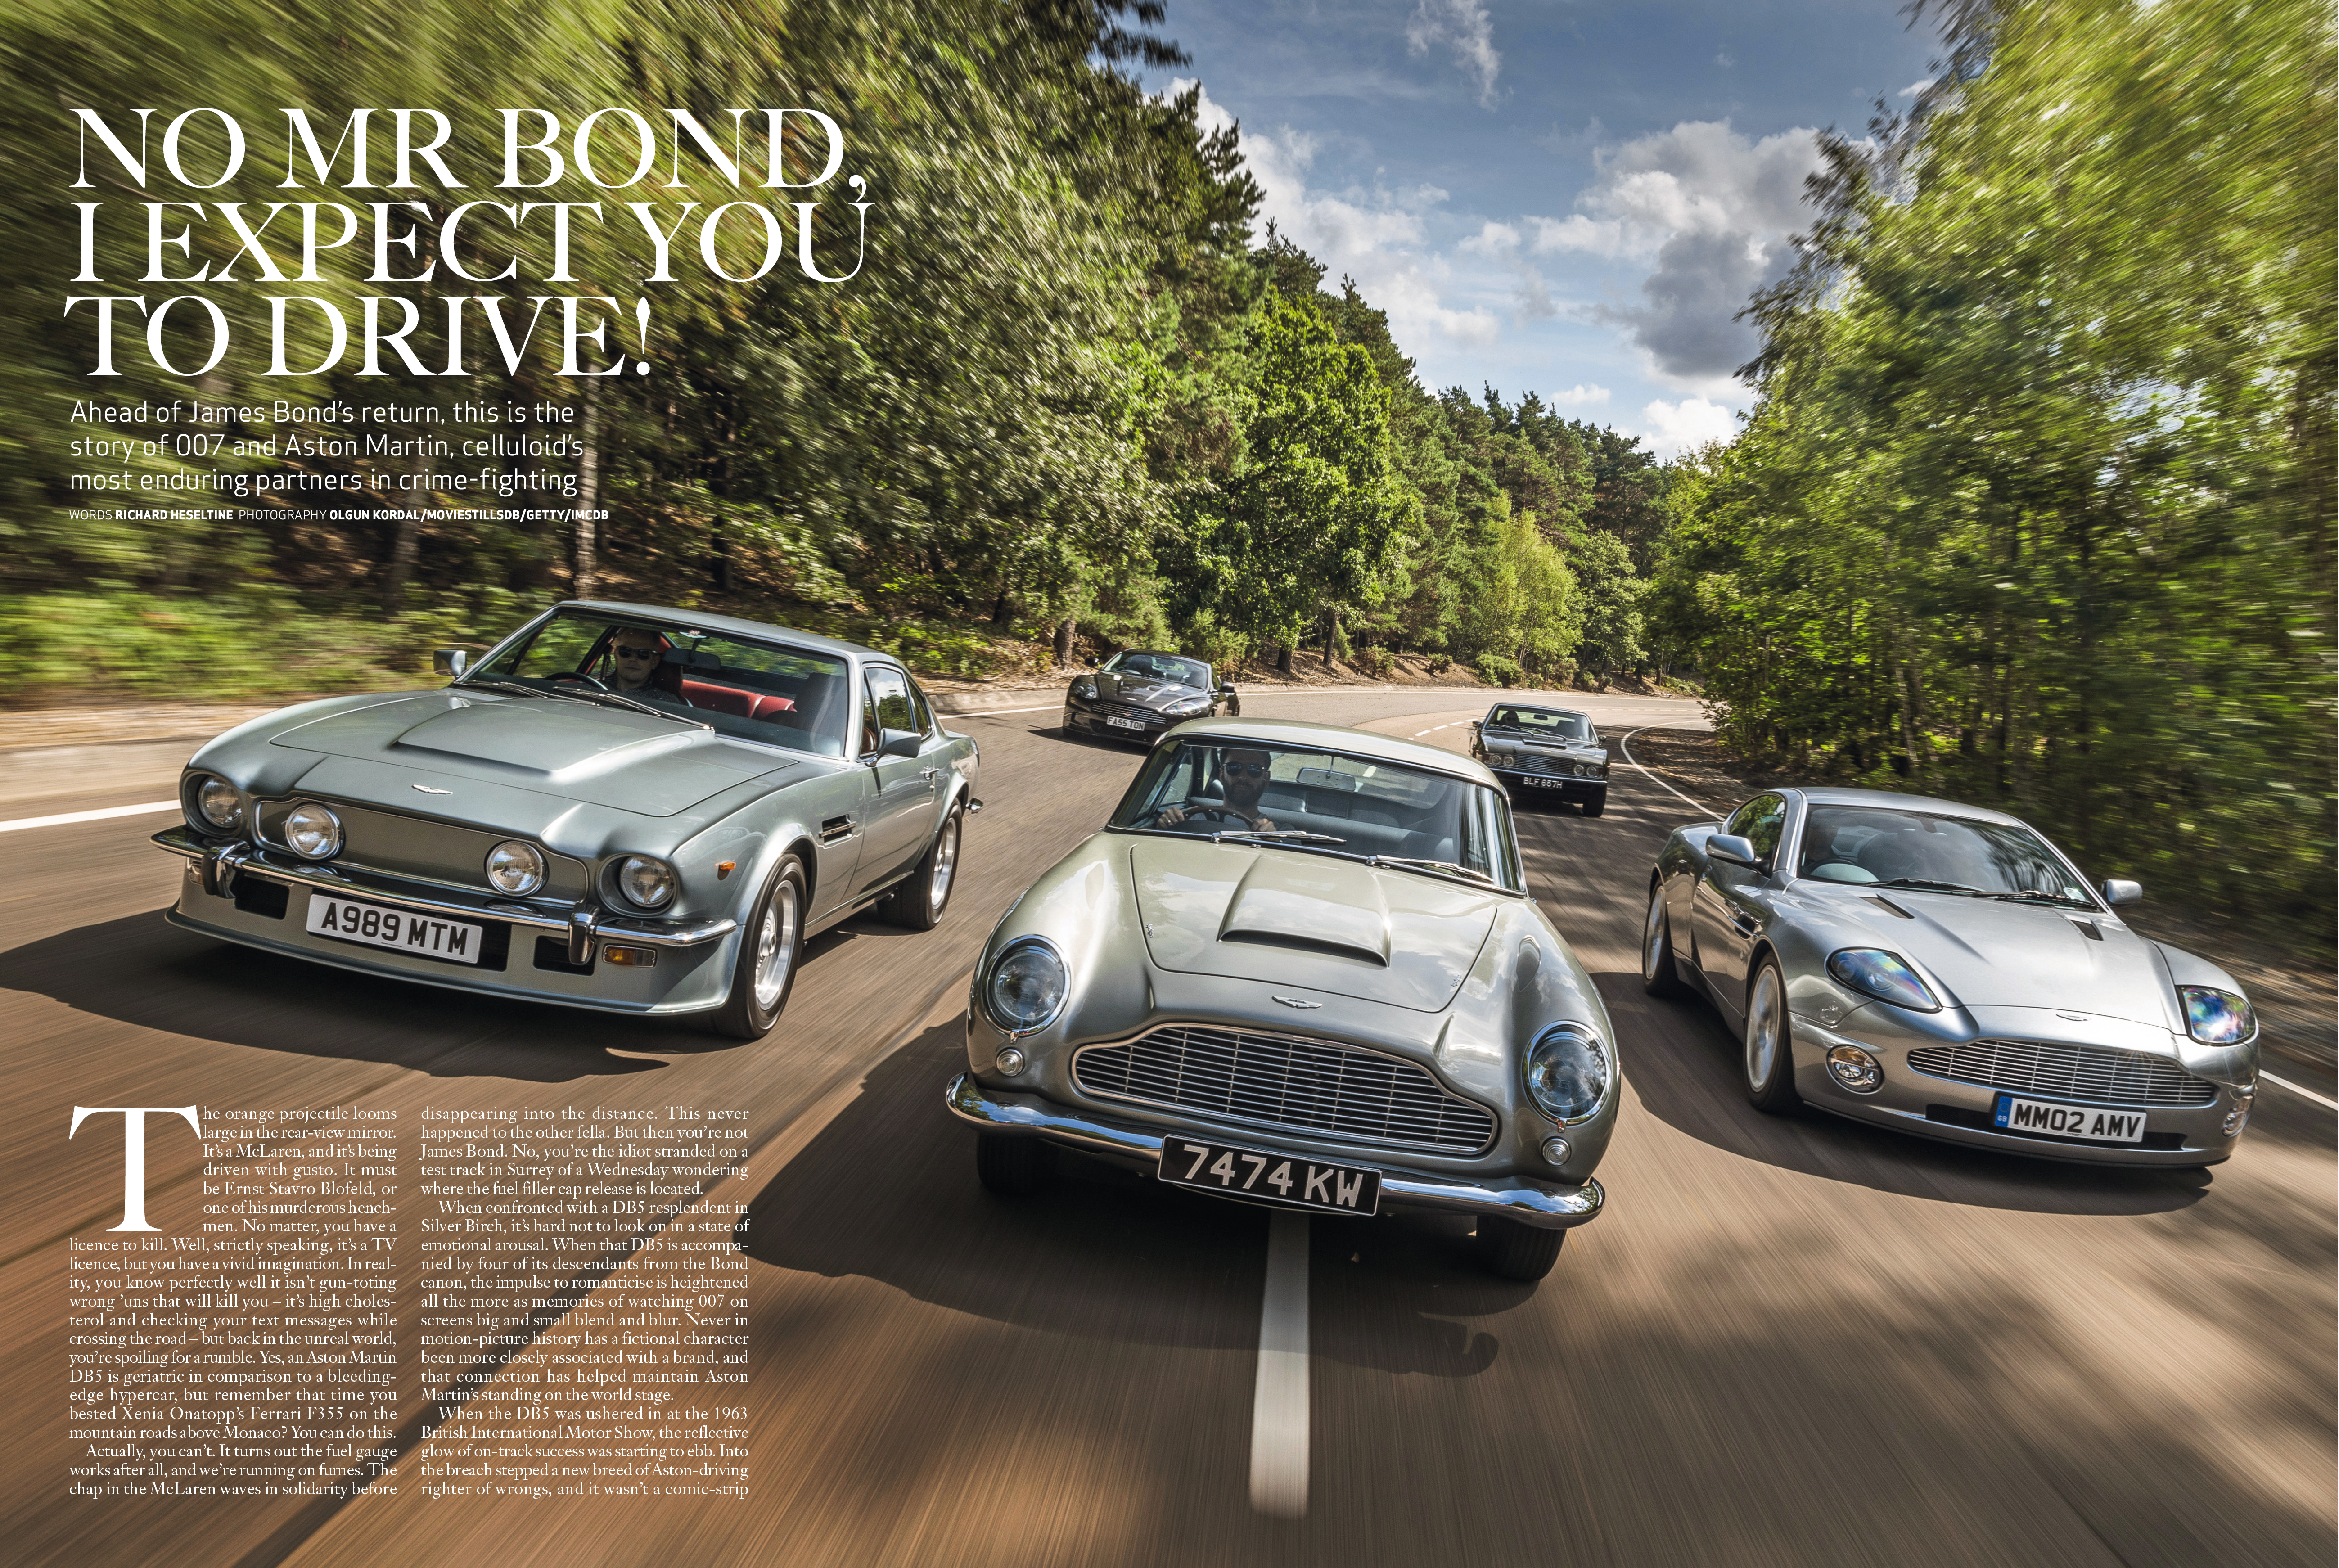 Classic & Sports Car – Bond’s Aston Martins: Inside the November 2019 issue of C&SC